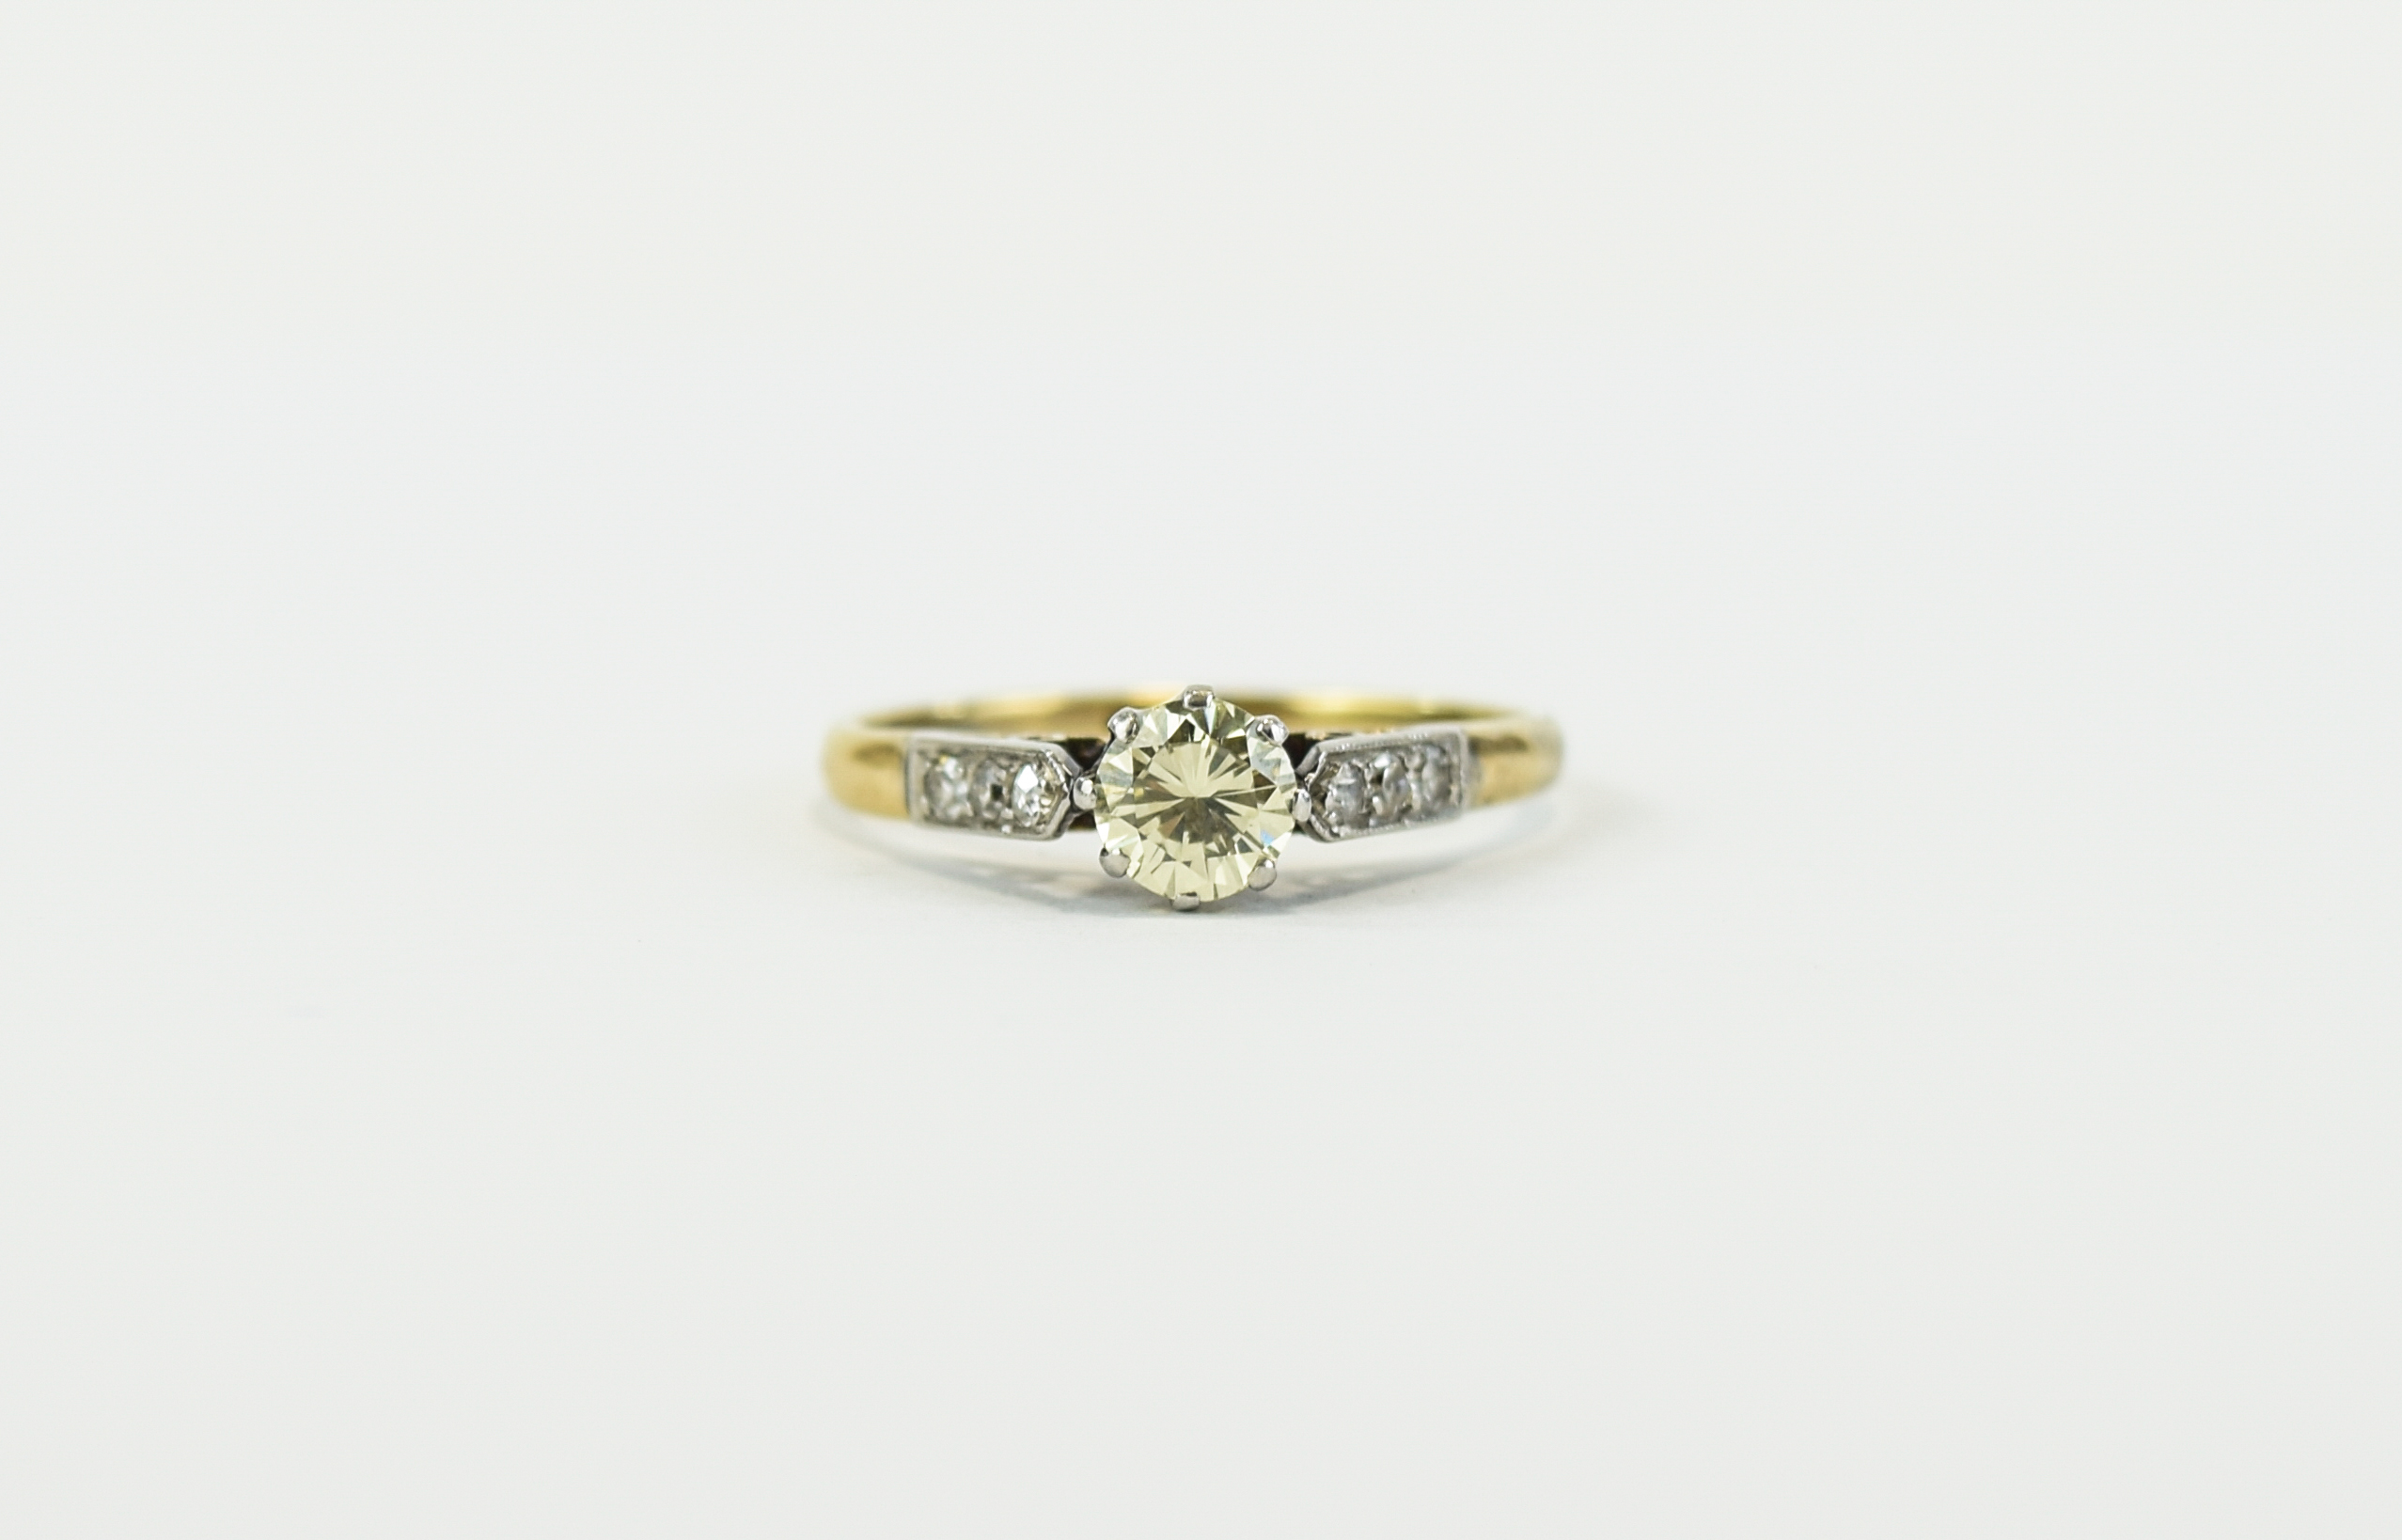 18ct Gold Set Single Diamond Ring with Six Small Diamonds to Shoulders. Diamond of Good Colour.